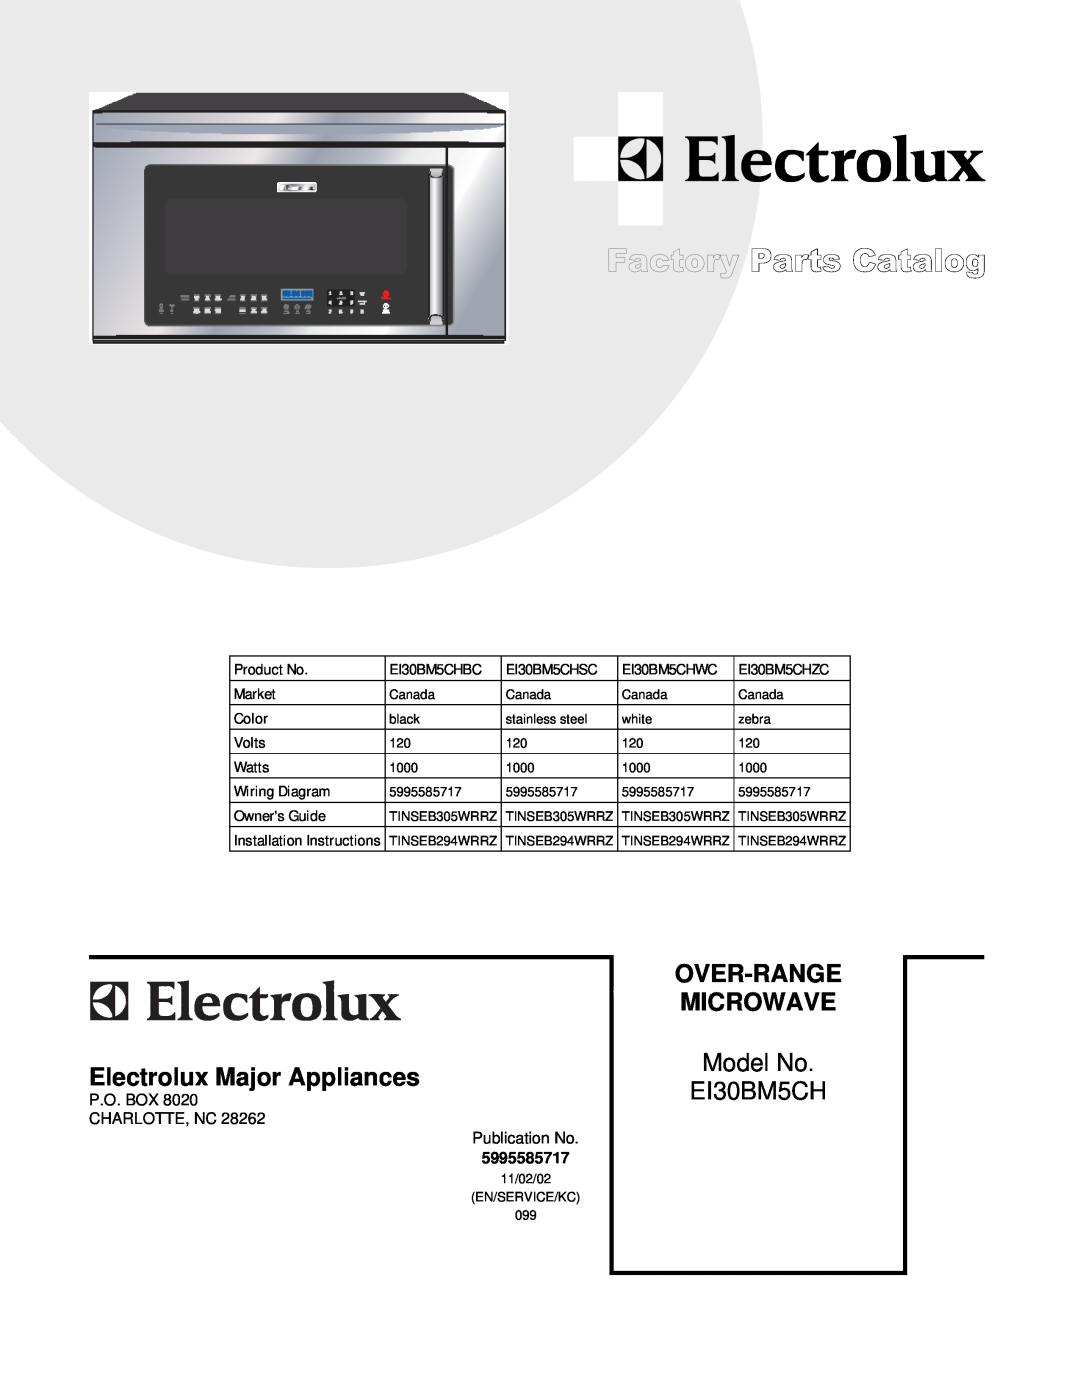 Electrolux EI30BM5CH installation instructions Electrolux Major Appliances, Over-Range, Microwave, Model No, P.O. Box 